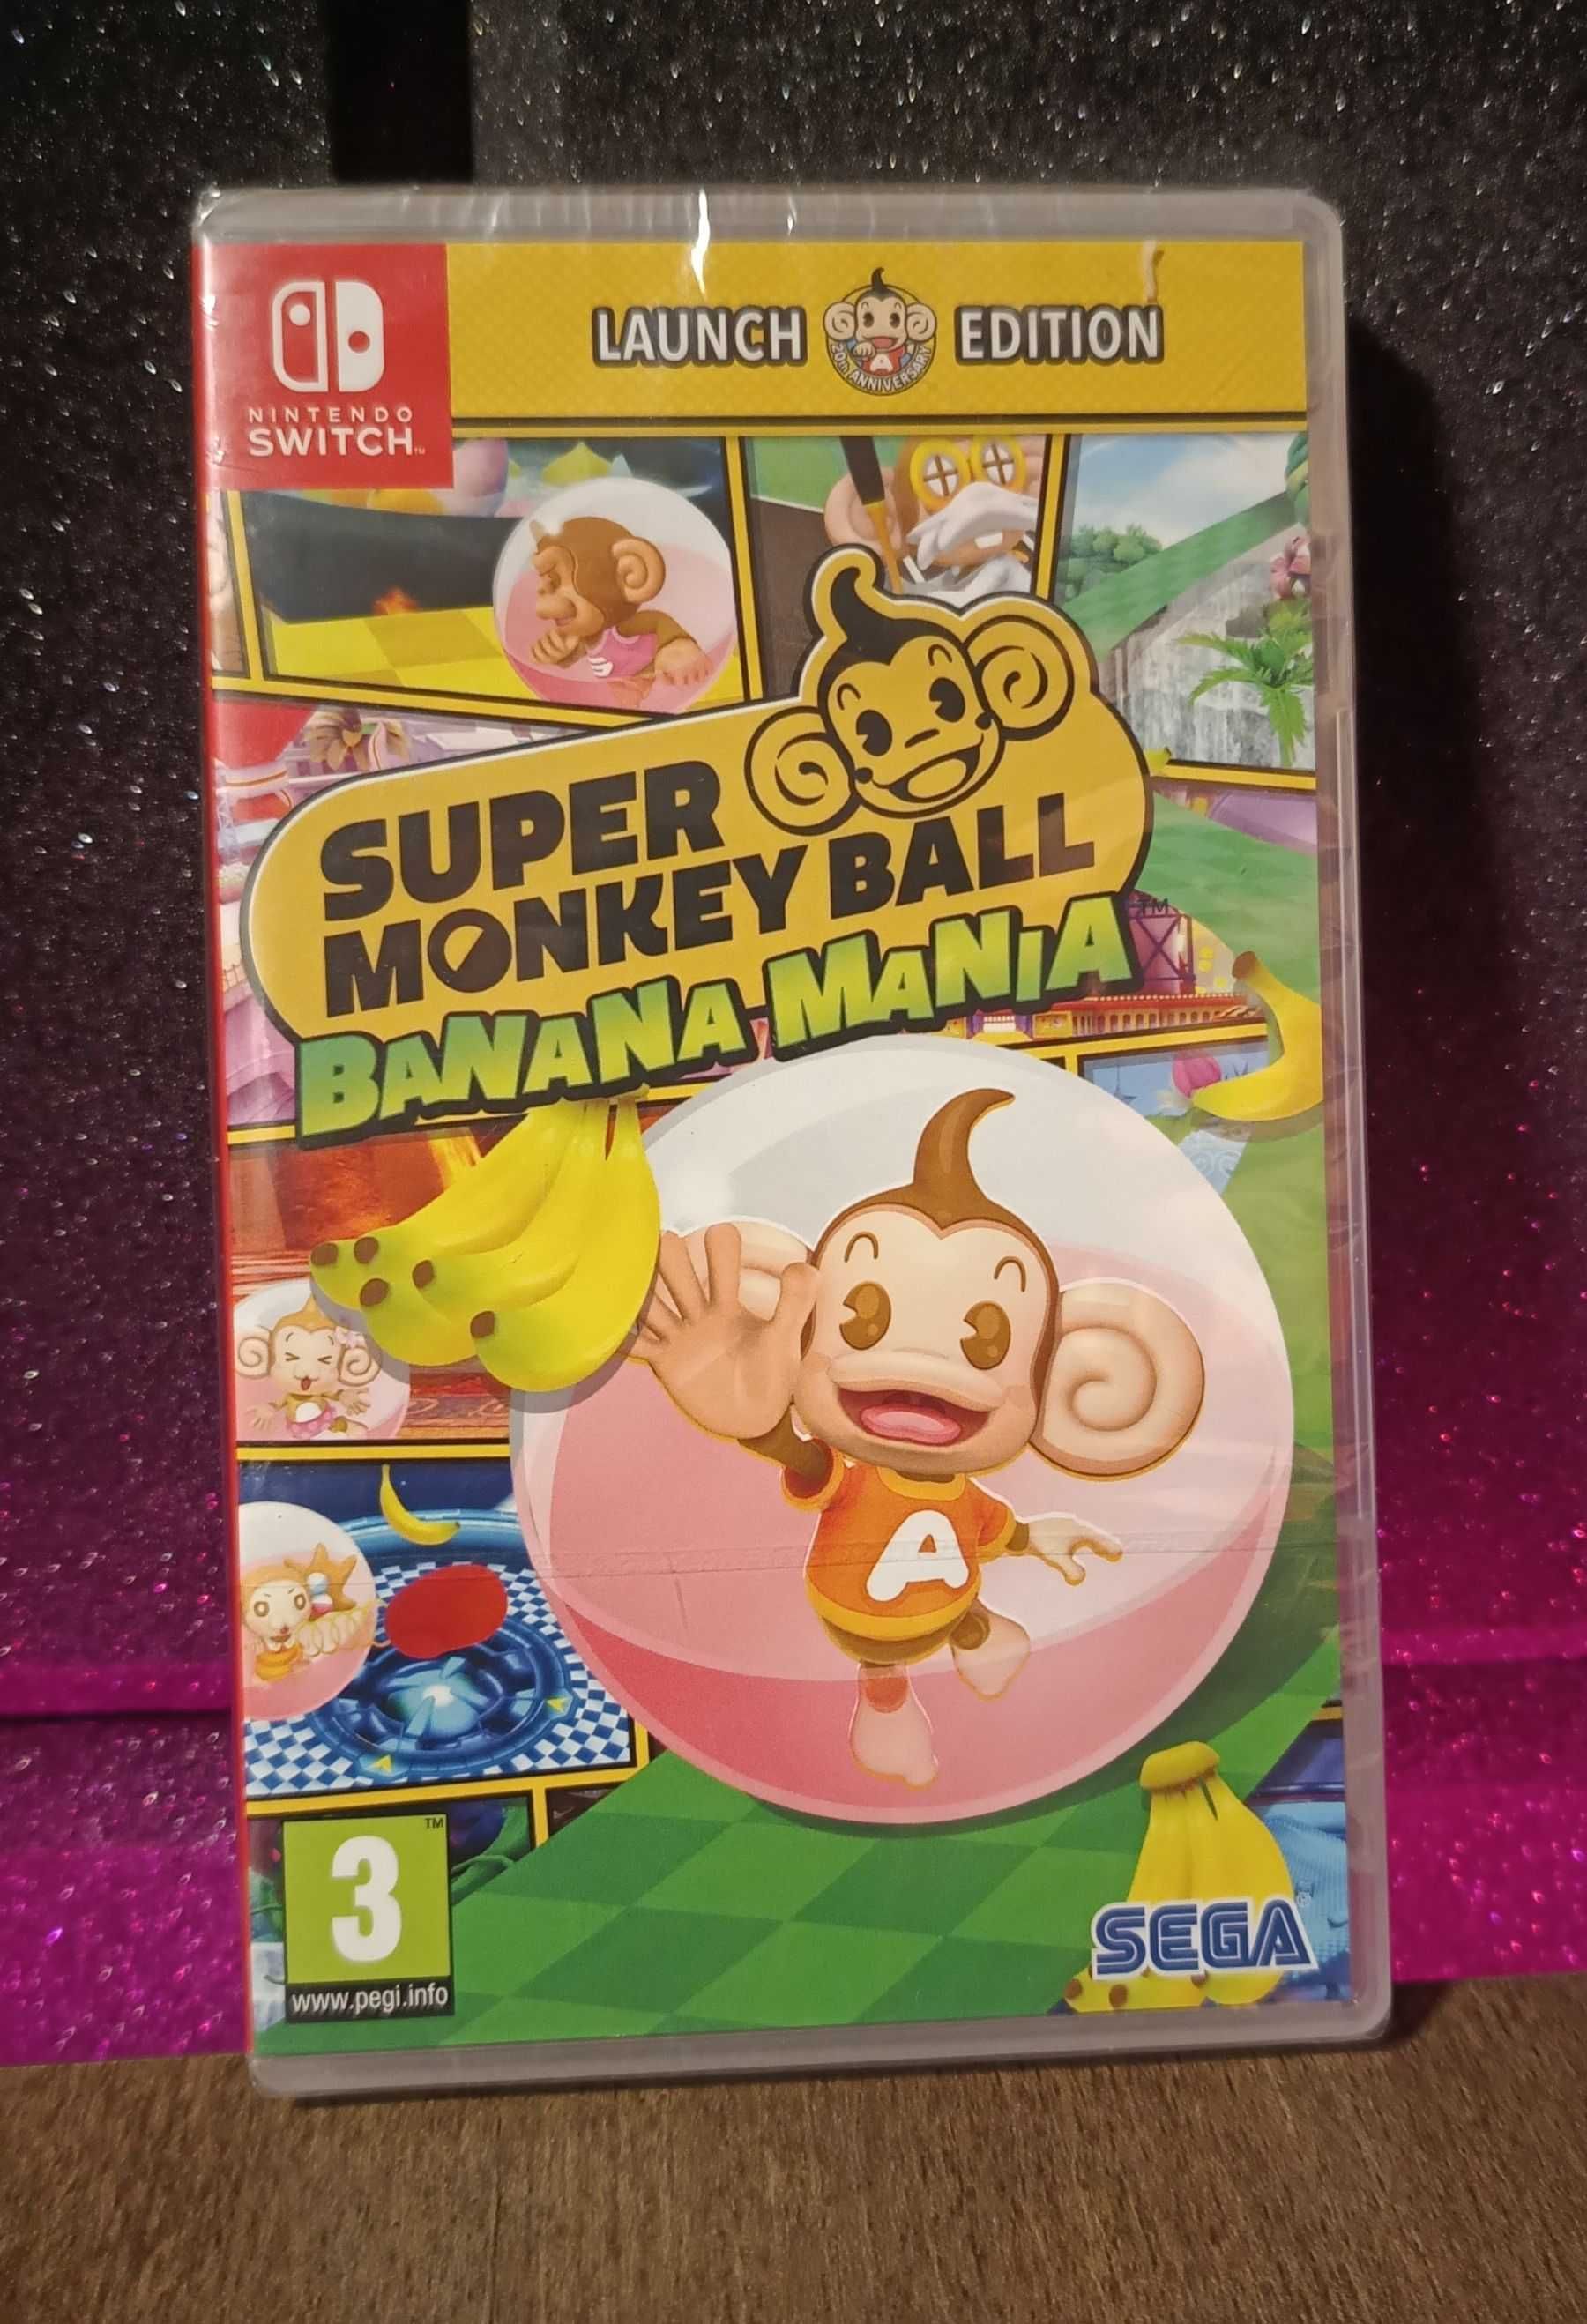 Super Monkey Ball: Banana Mania Nintendo Switch - super gra dla dzieci